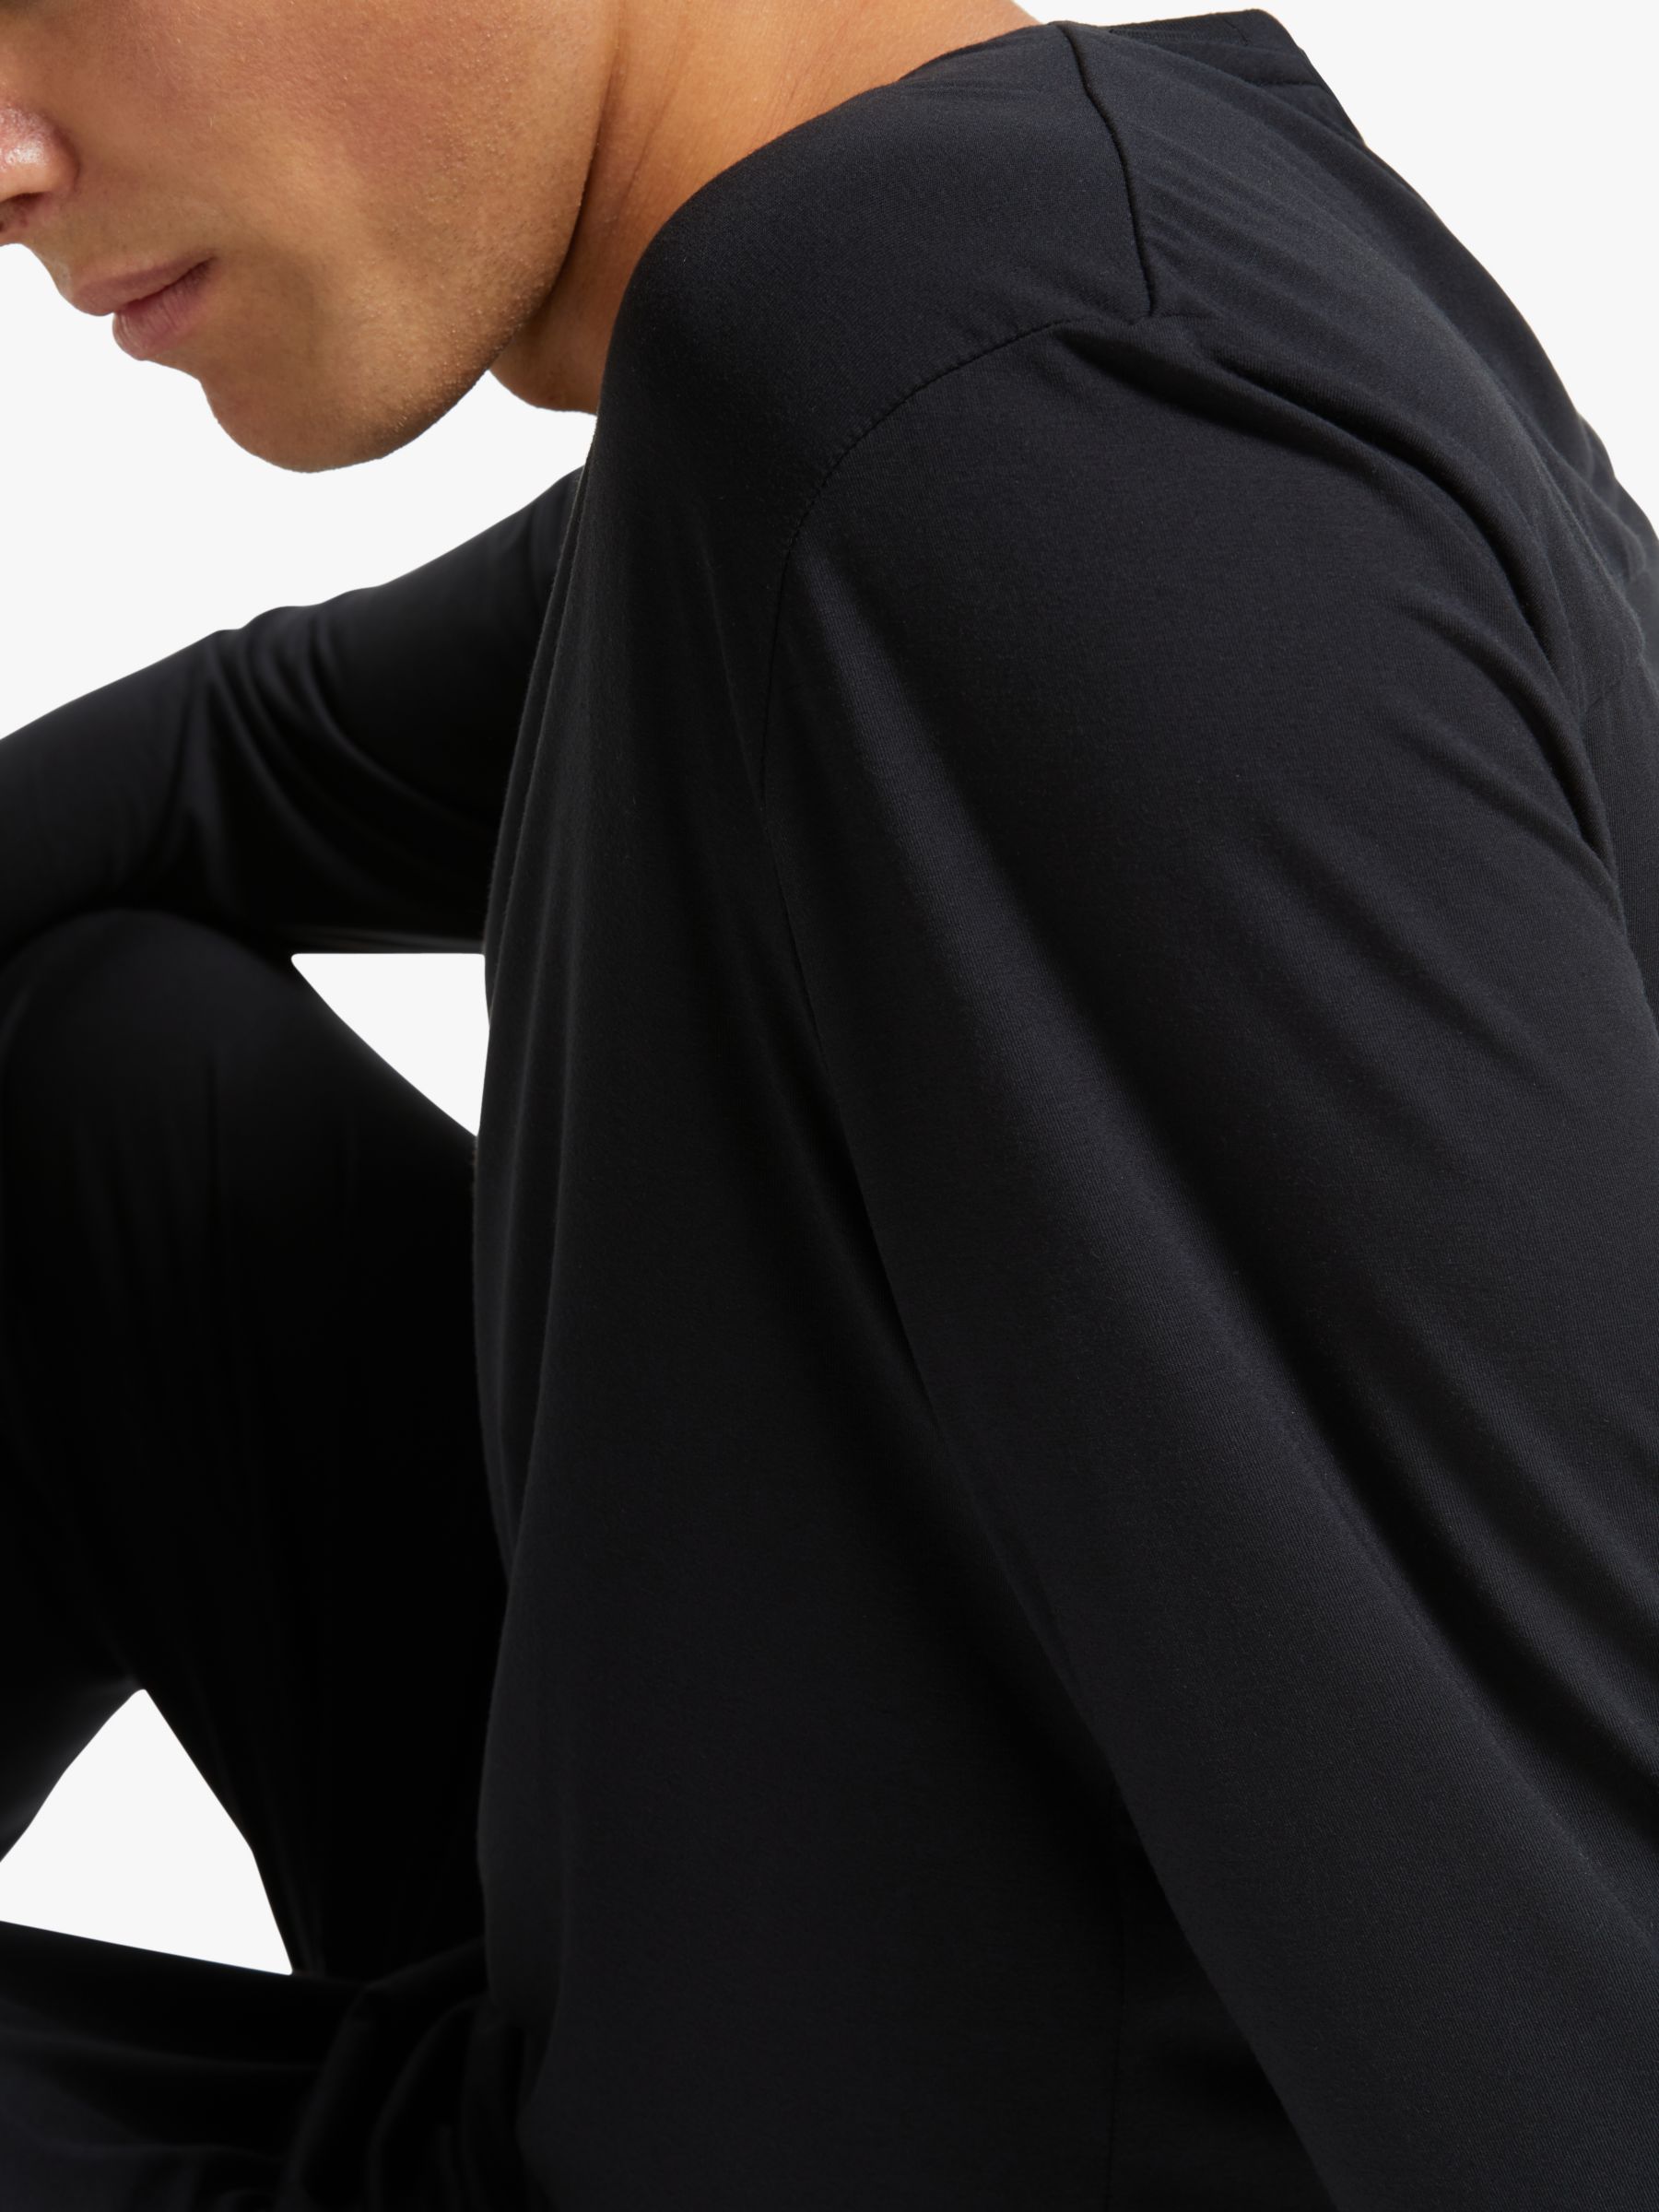 John Lewis Ultra Soft Modal Long Sleeve Lounge Top, Black, S